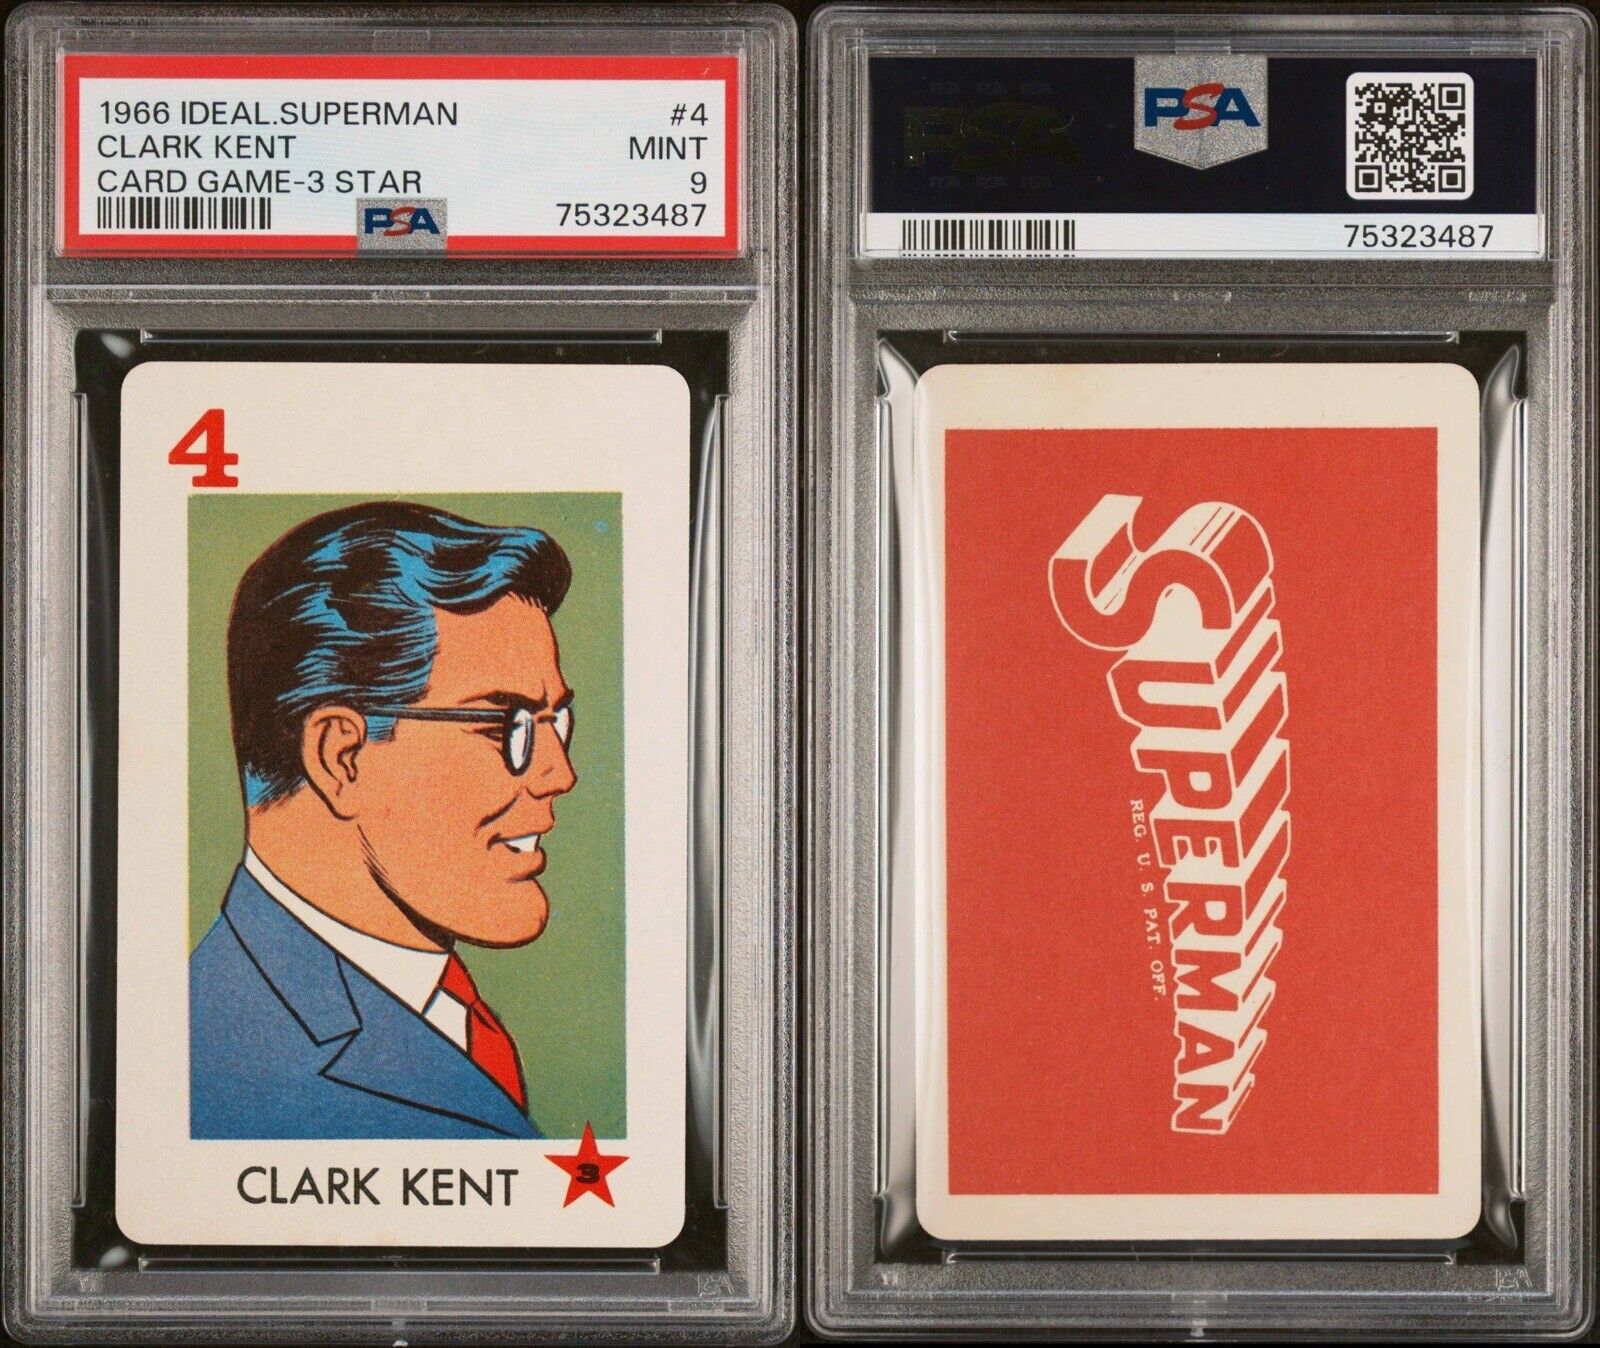 RARE VINTAGE 1966 IDEAL SUPERMAN CLARK KENT CARD GAME ROOKIE PSA 9 MINT